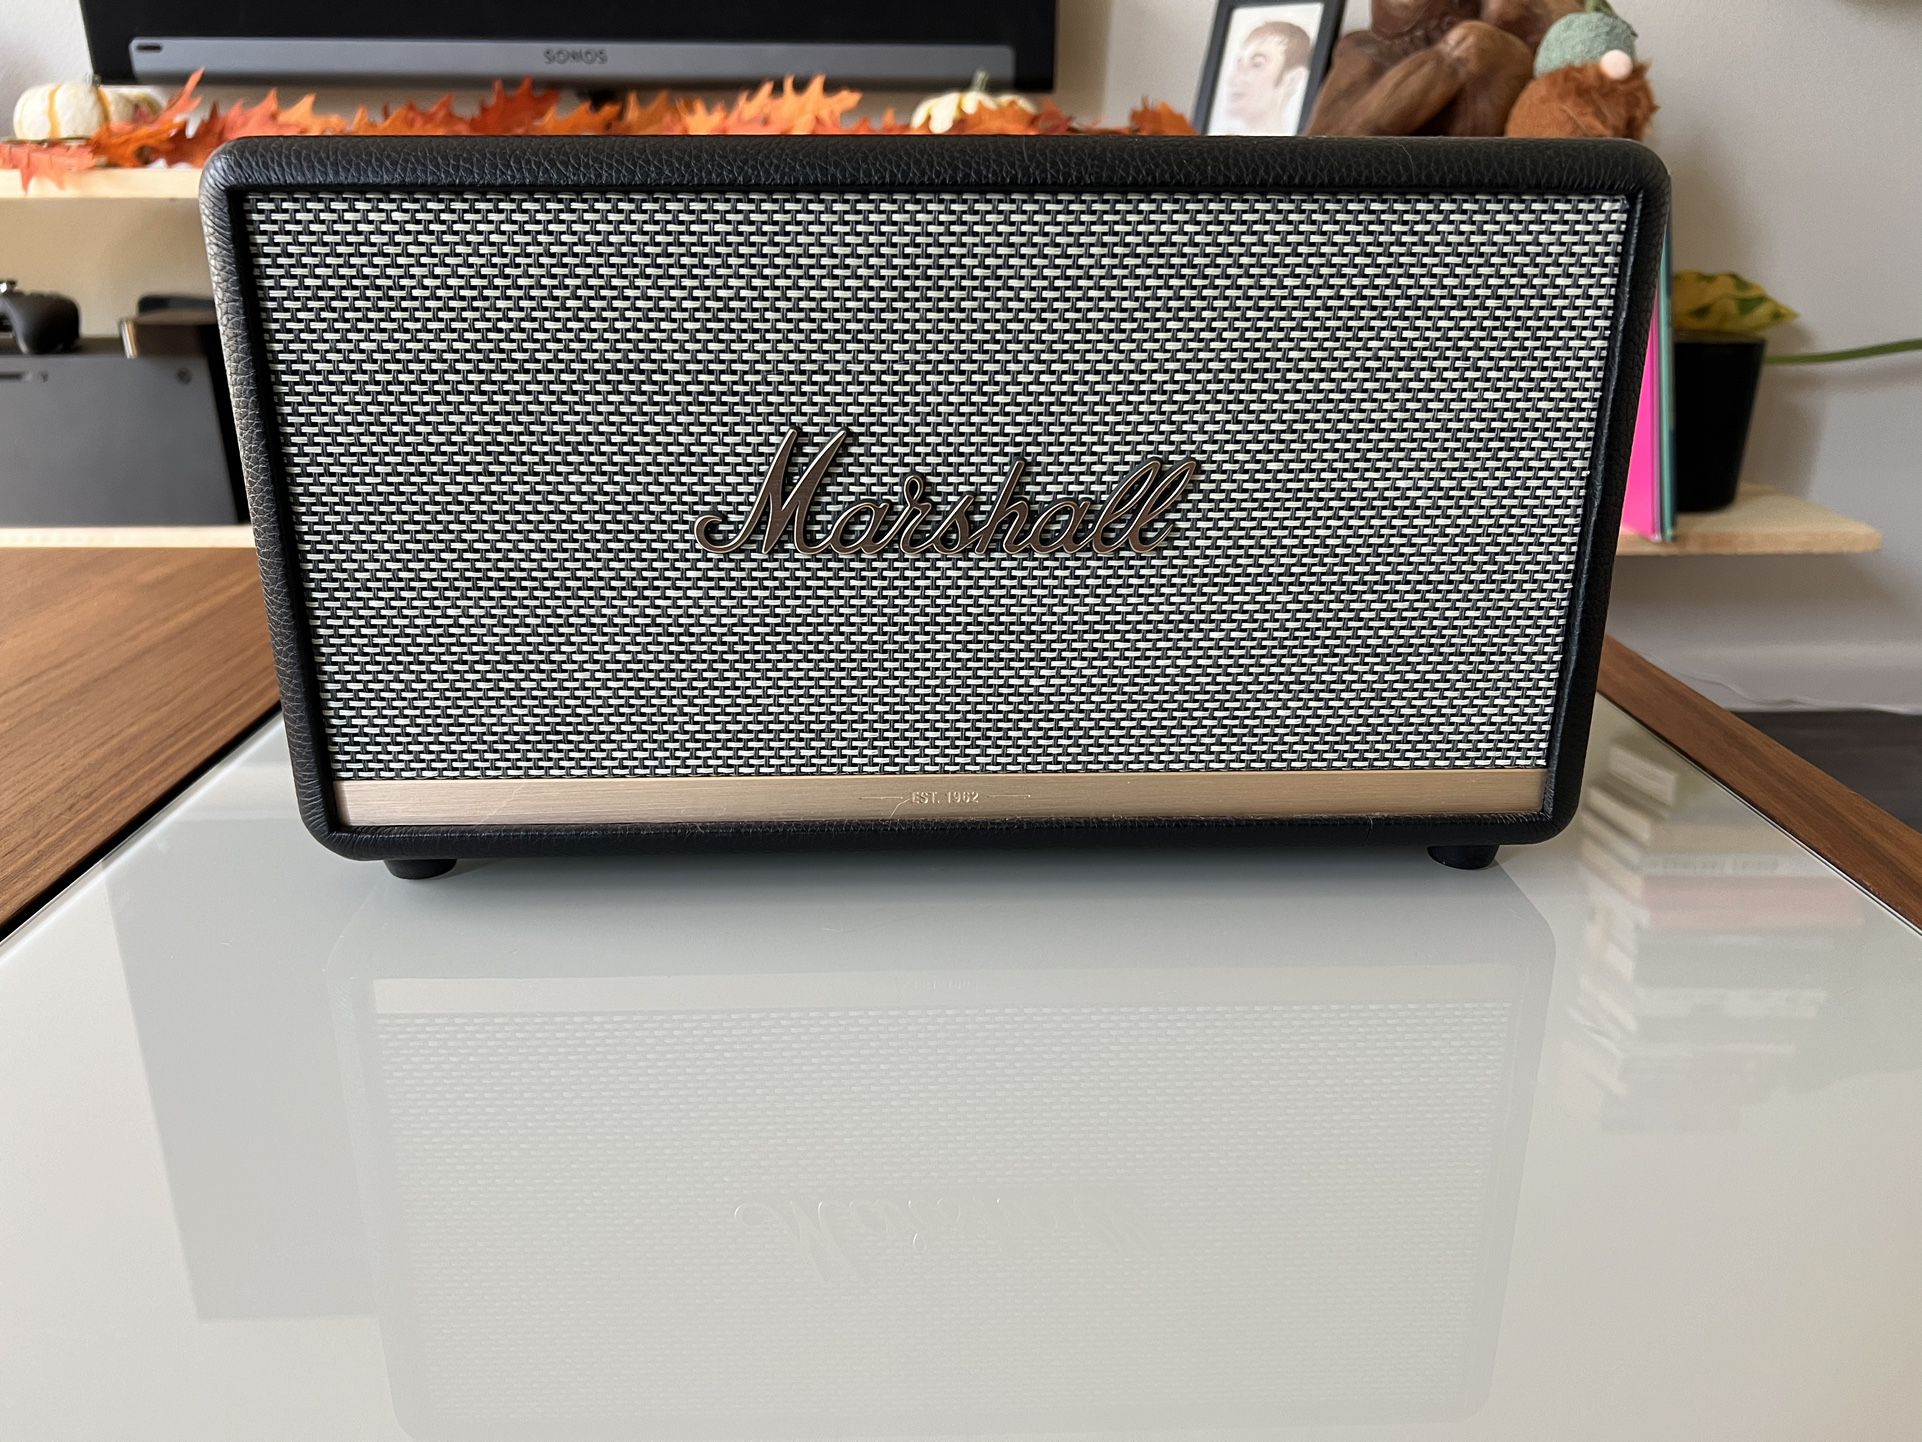 Marshall - Stanmore I| Bluetooth Speaker - Black